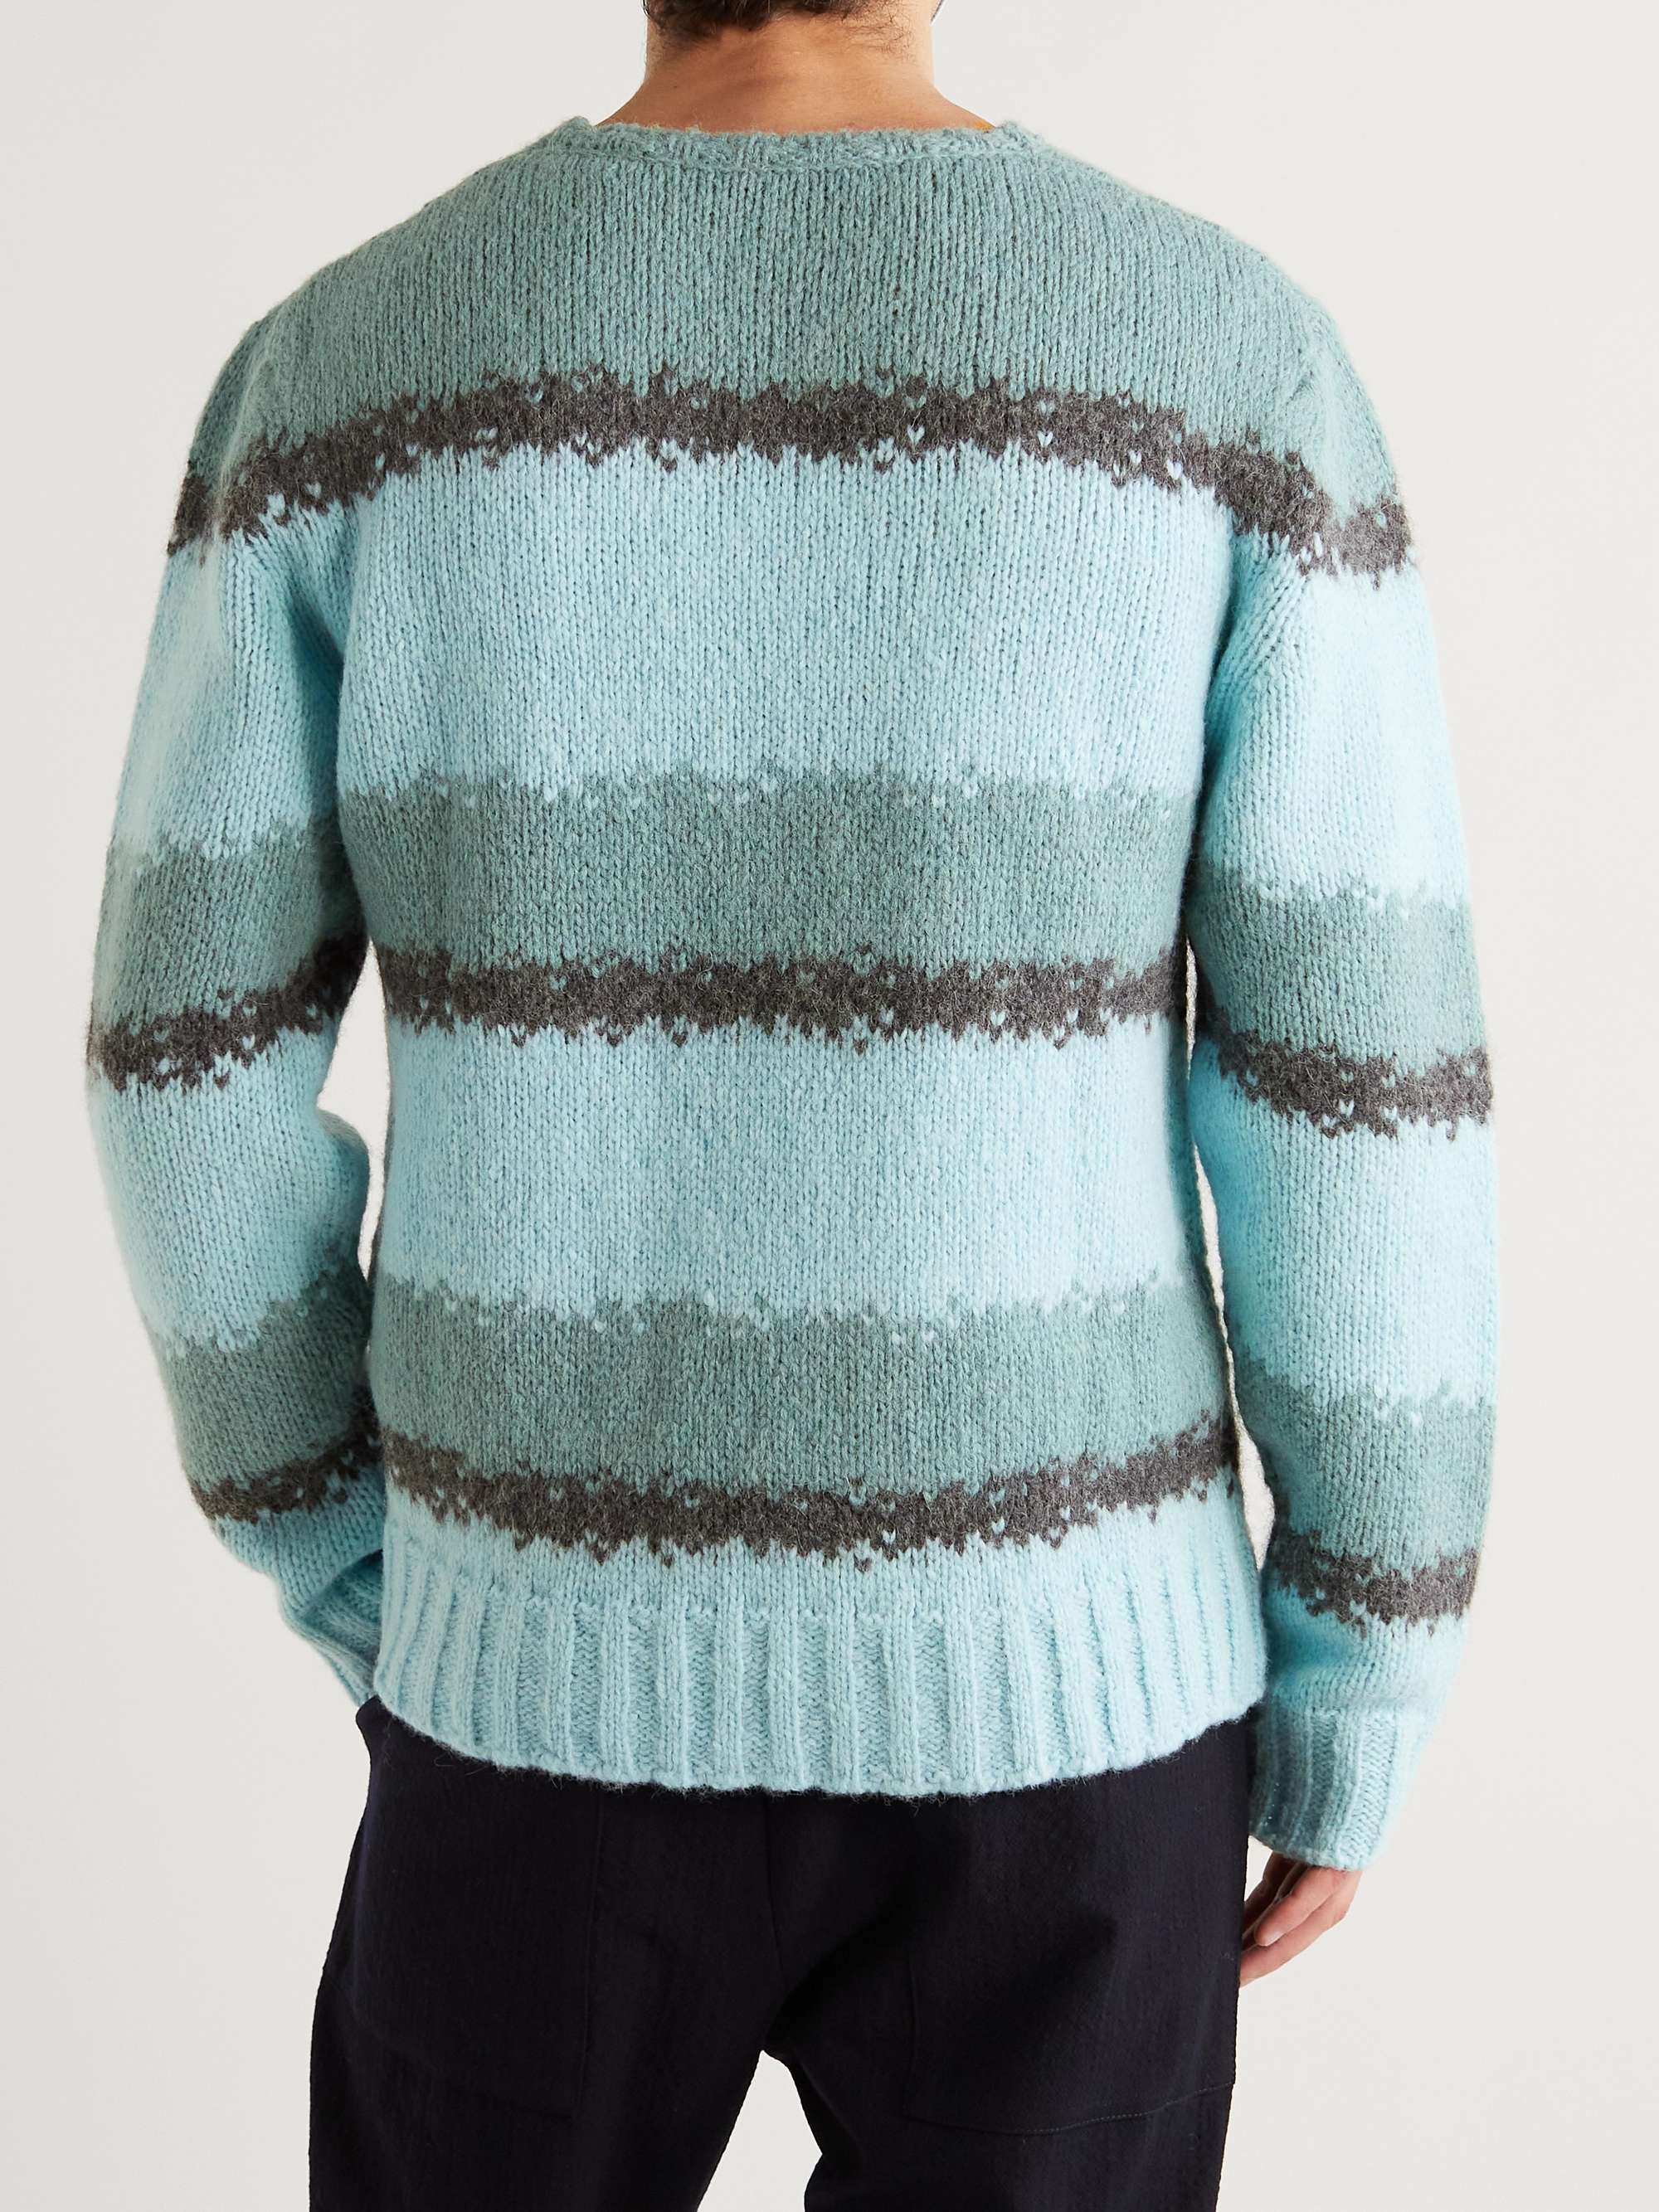 OFFICINE GENERALE Marco Striped Alpaca-Blend Sweater